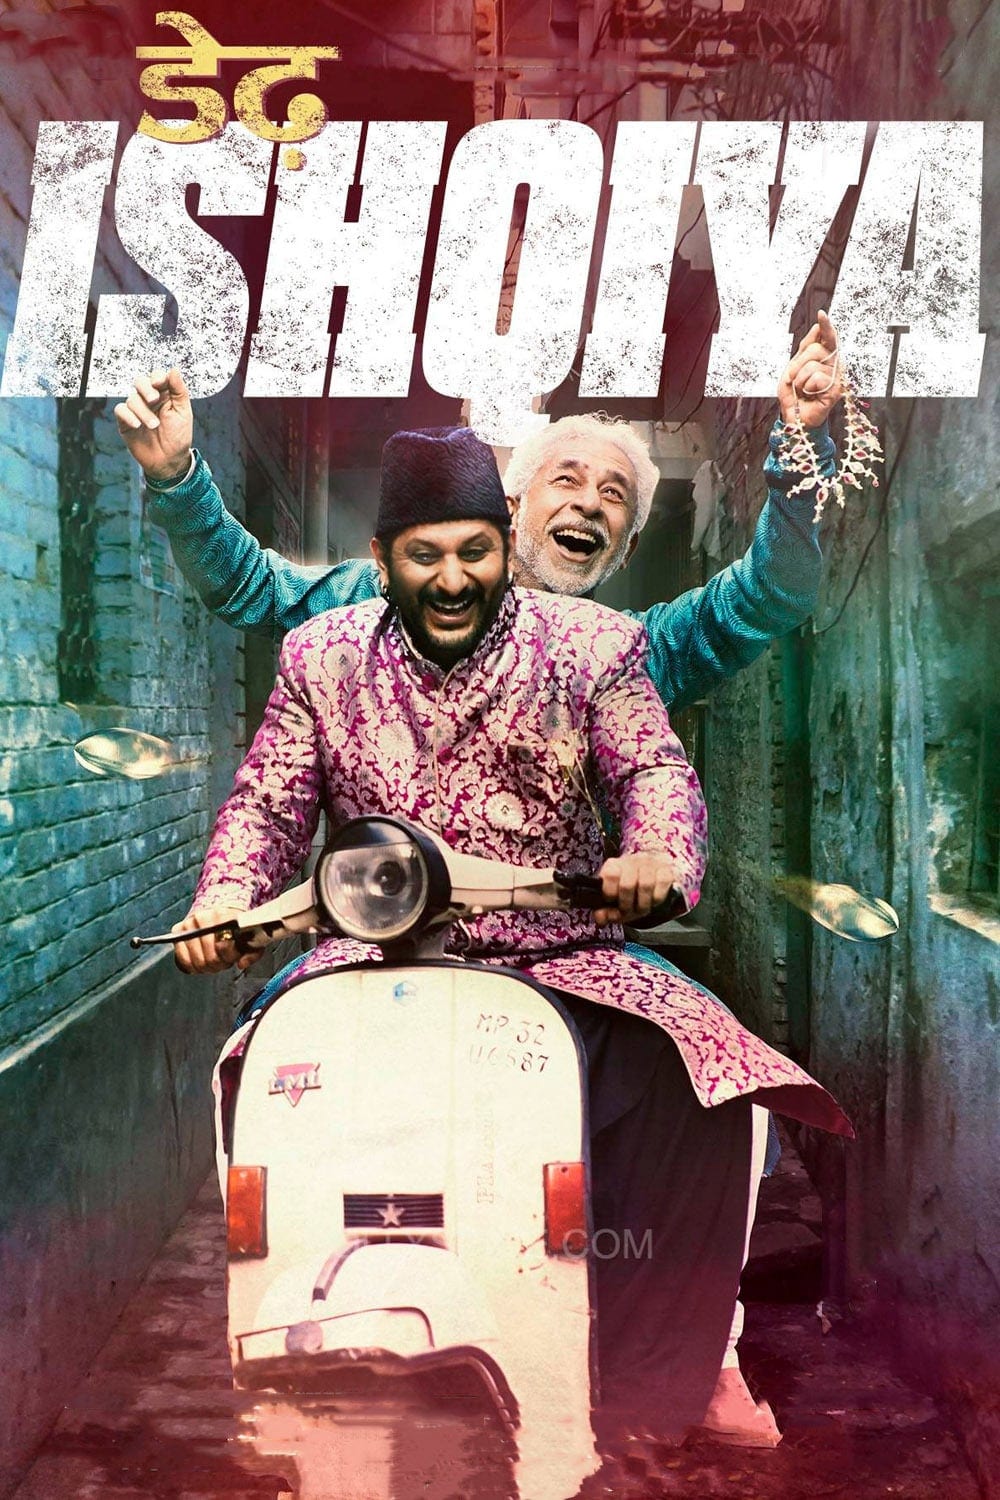 Poster for the movie "Dedh Ishqiya"